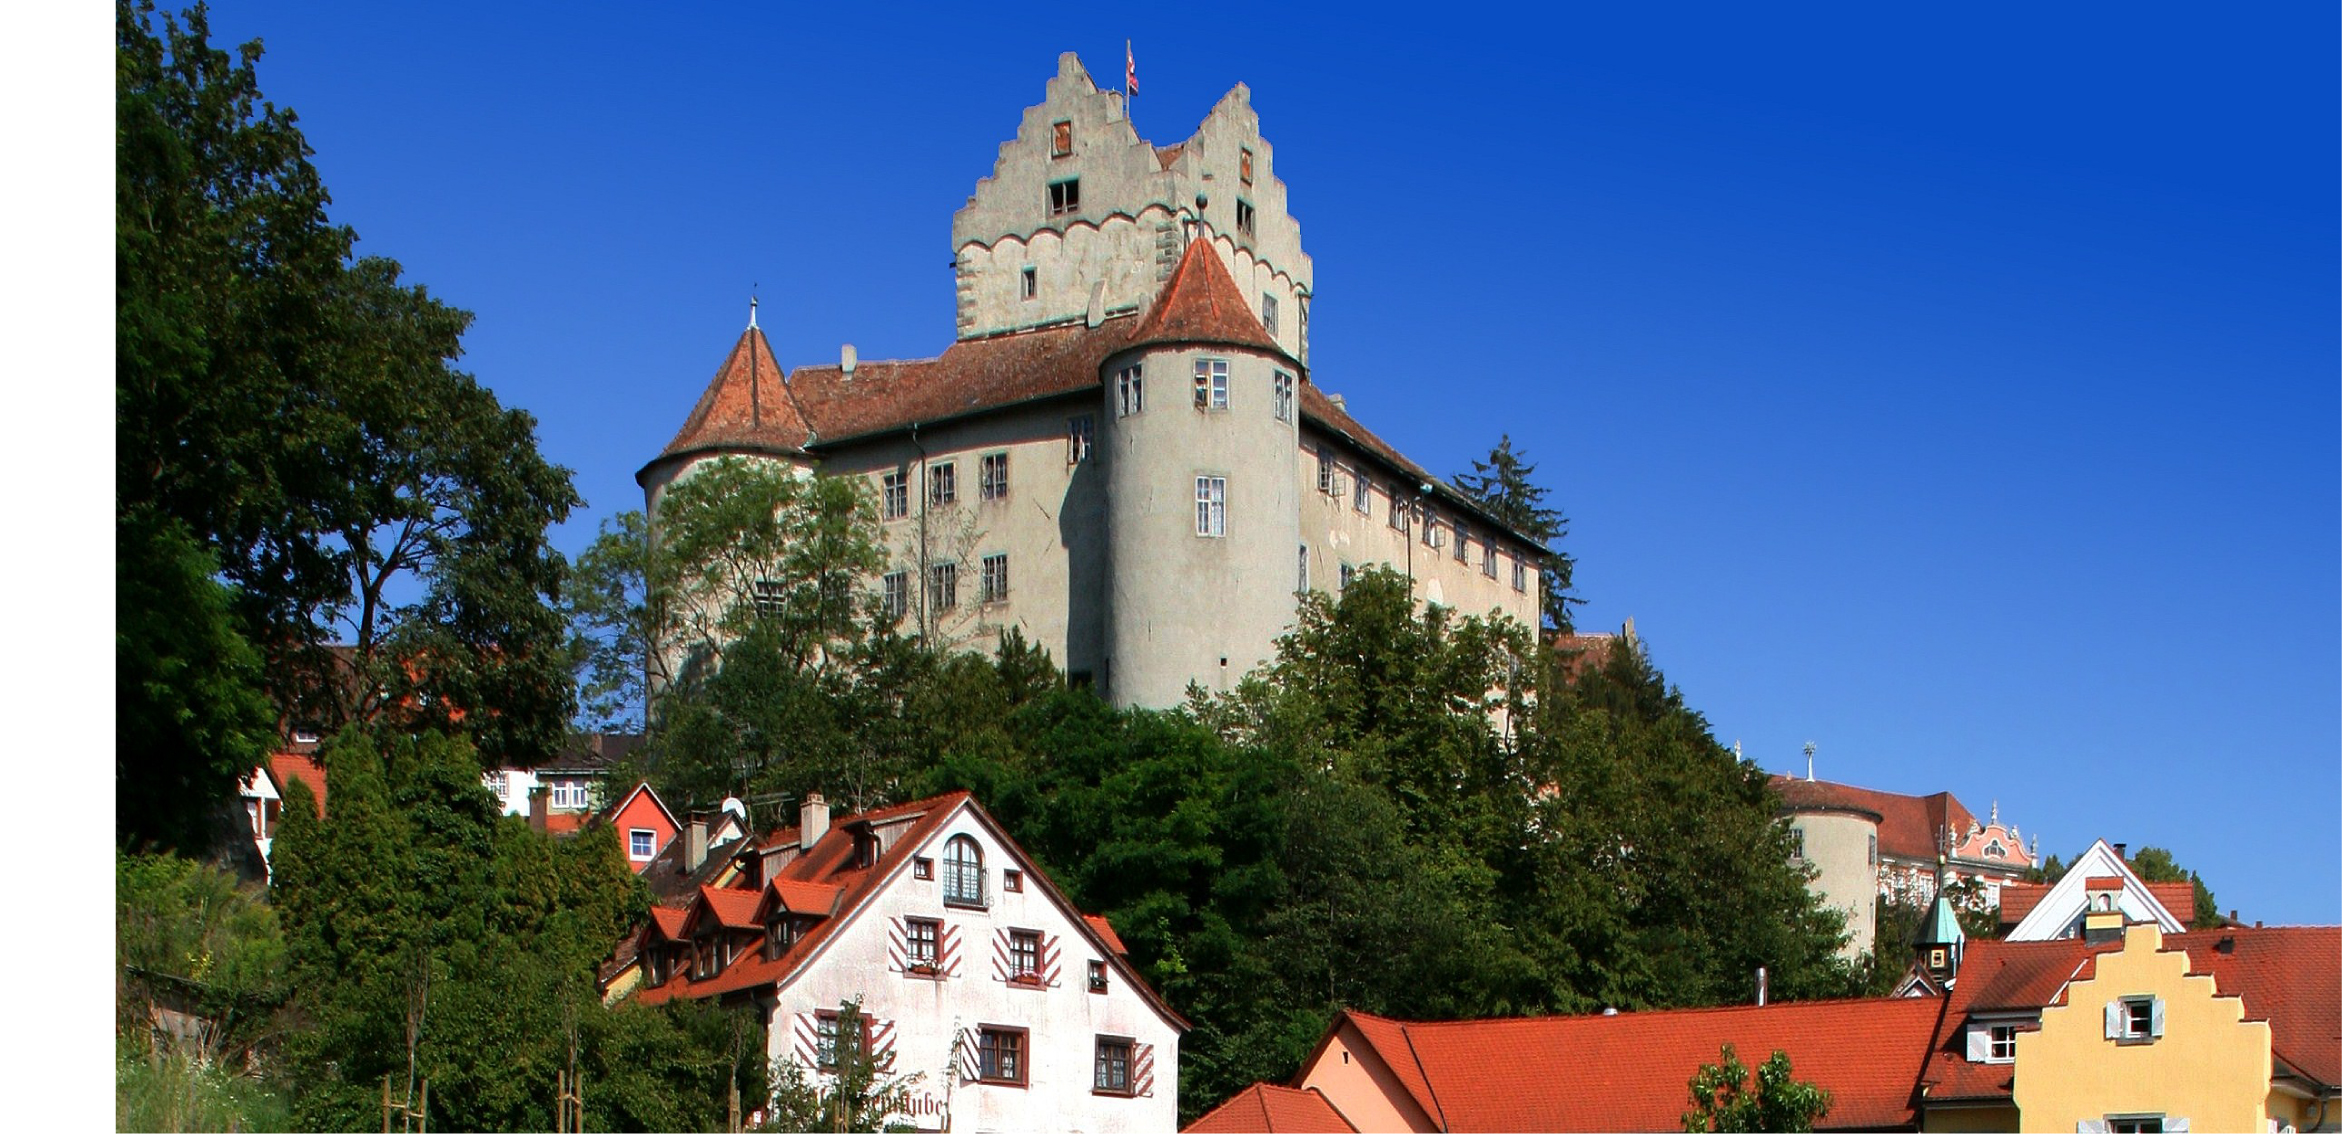 Burg Meersburg Backgrounds, Compatible - PC, Mobile, Gadgets| 2342x1134 px